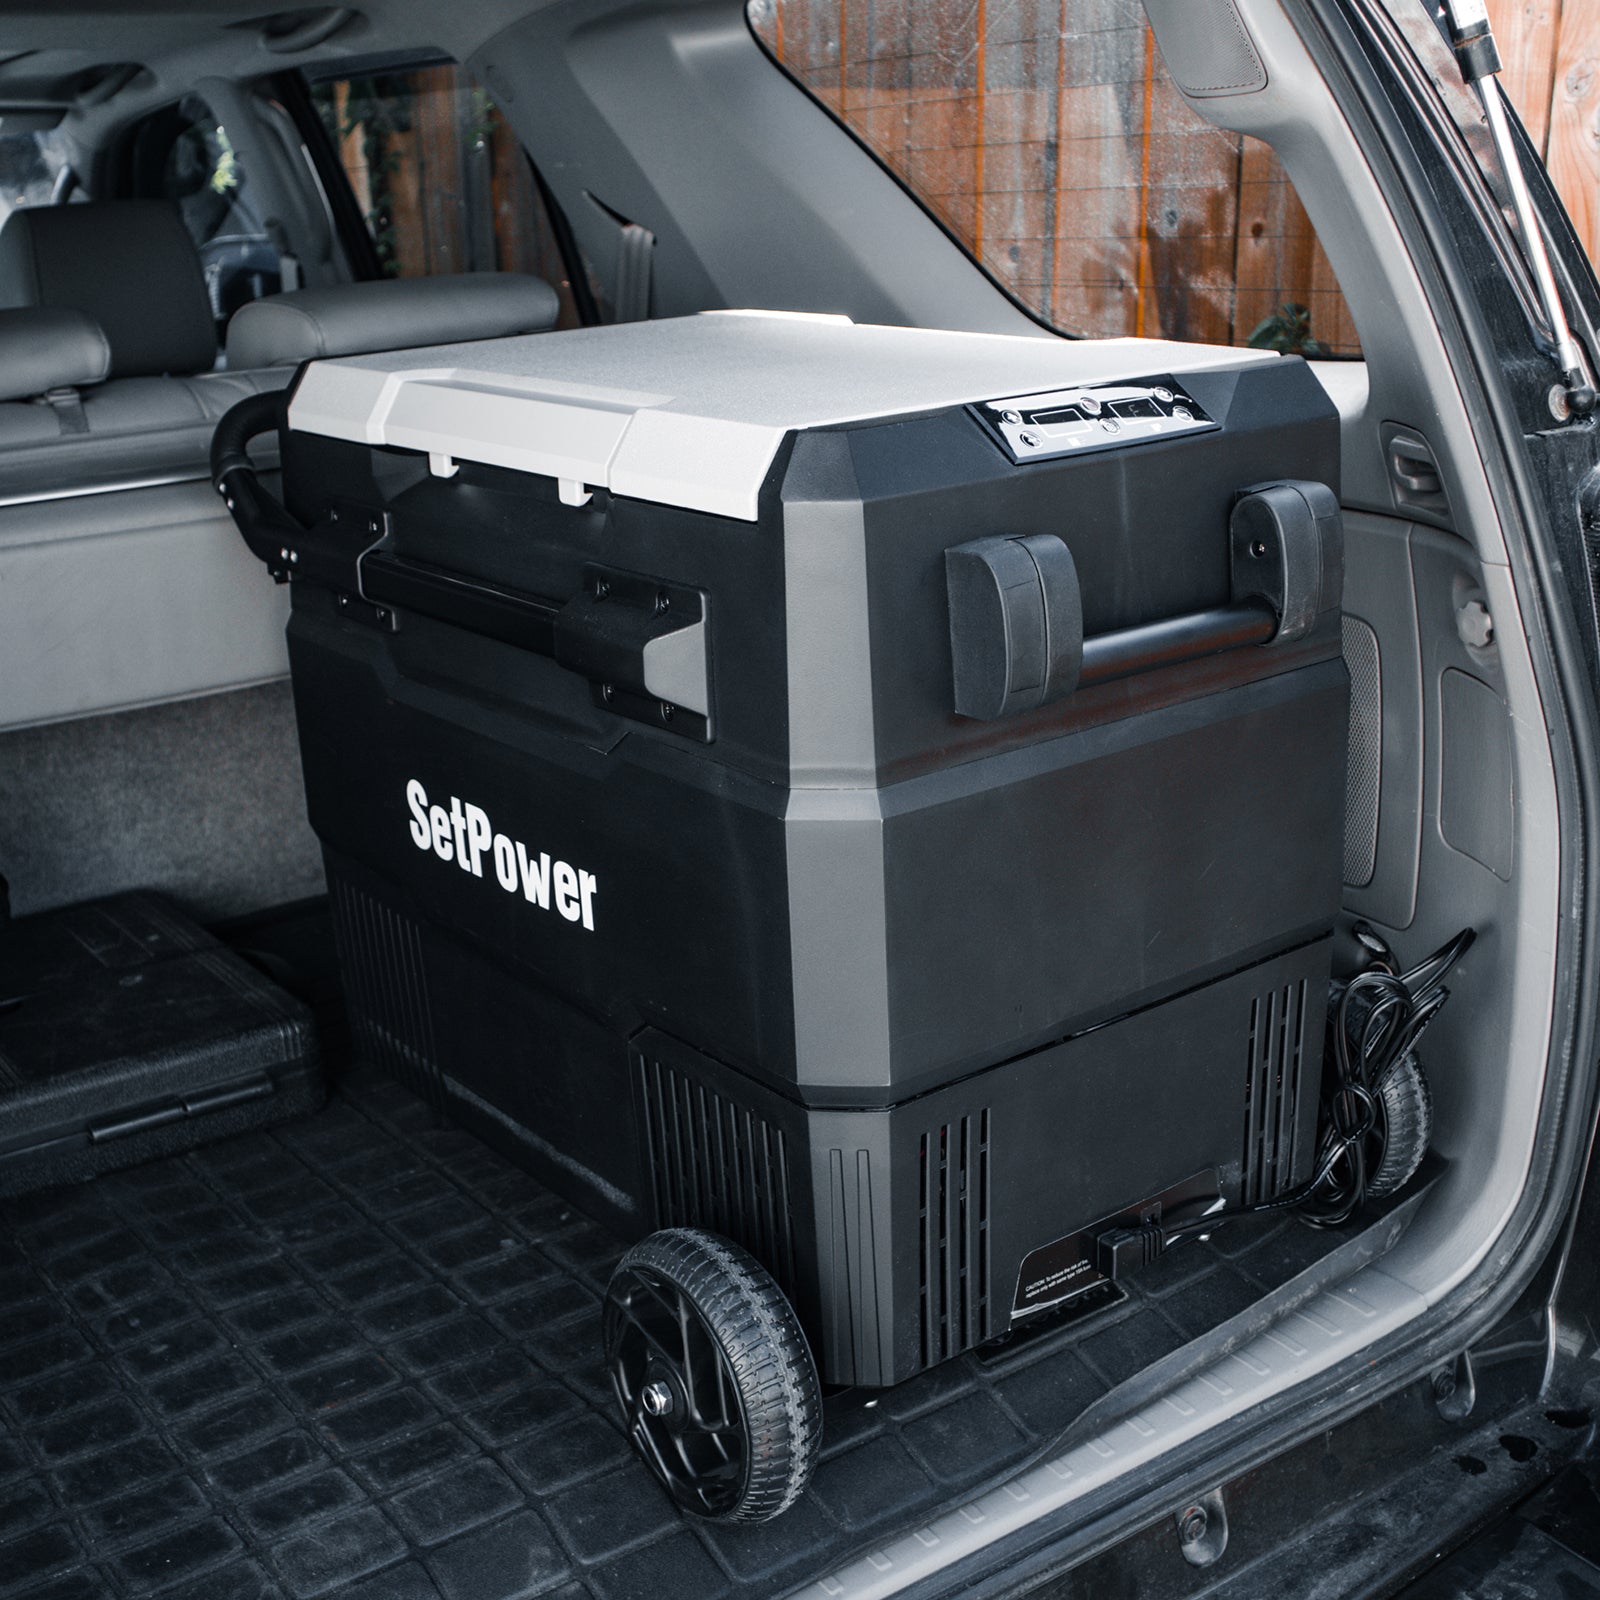 Setpower 45Qt 12 Volt Car Refrigerator RVD Pro With Baskets Wheels